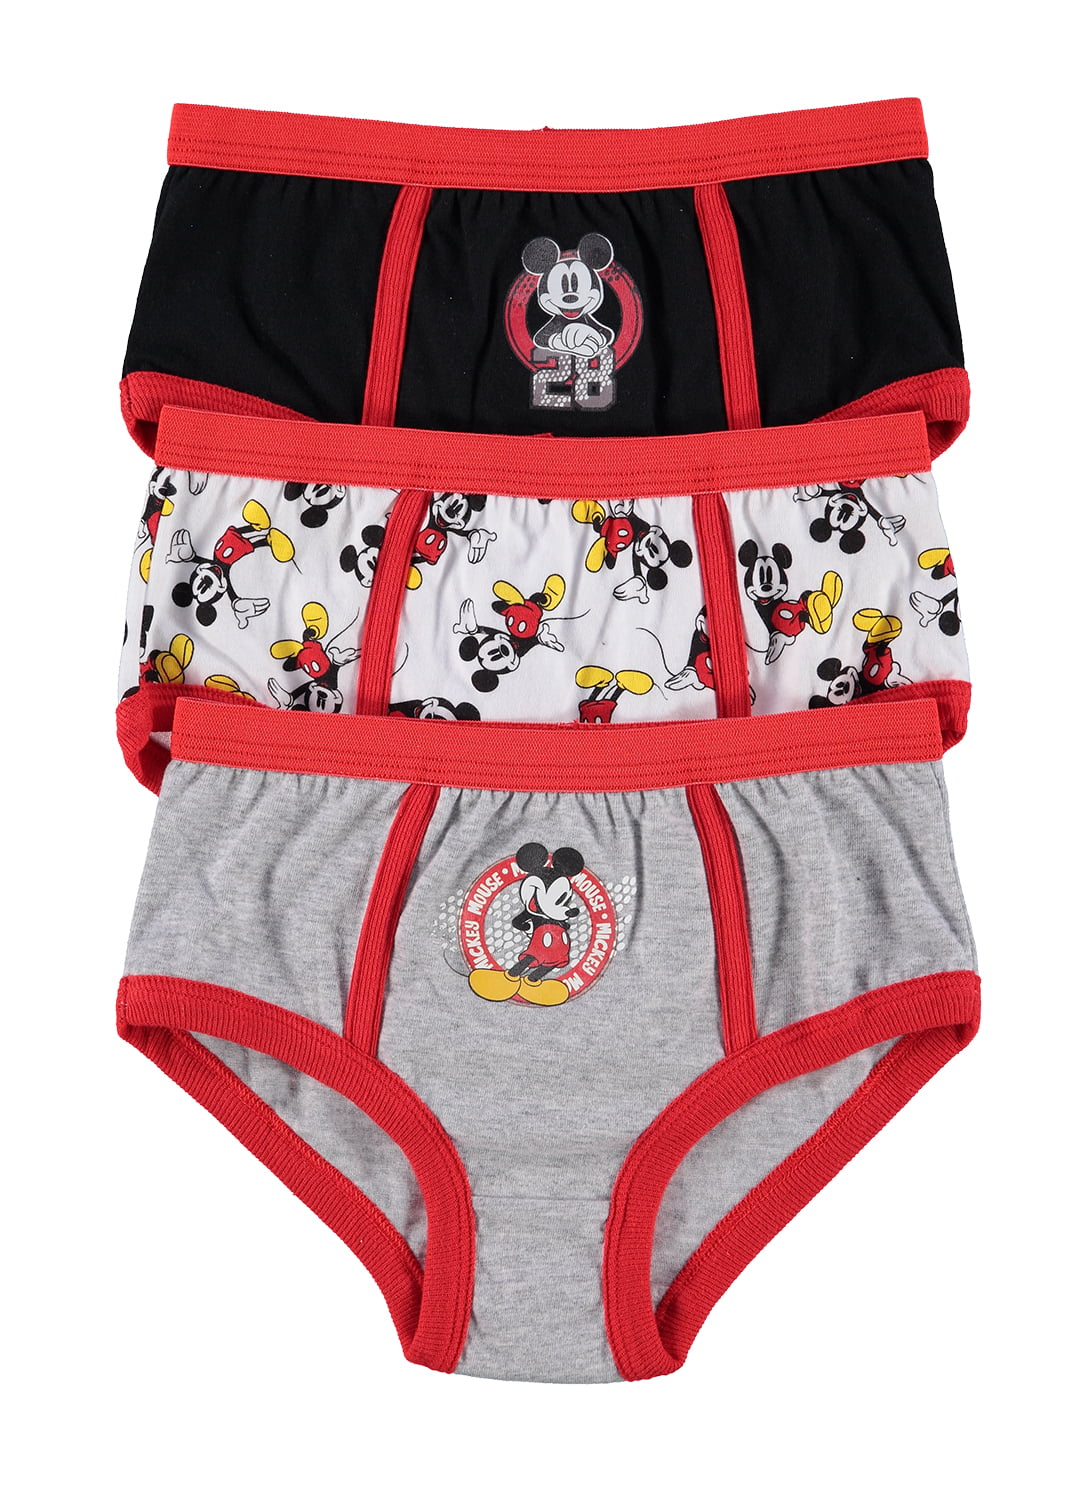 Disney Mickey Mouse Boys Underwear Briefs 6-pack